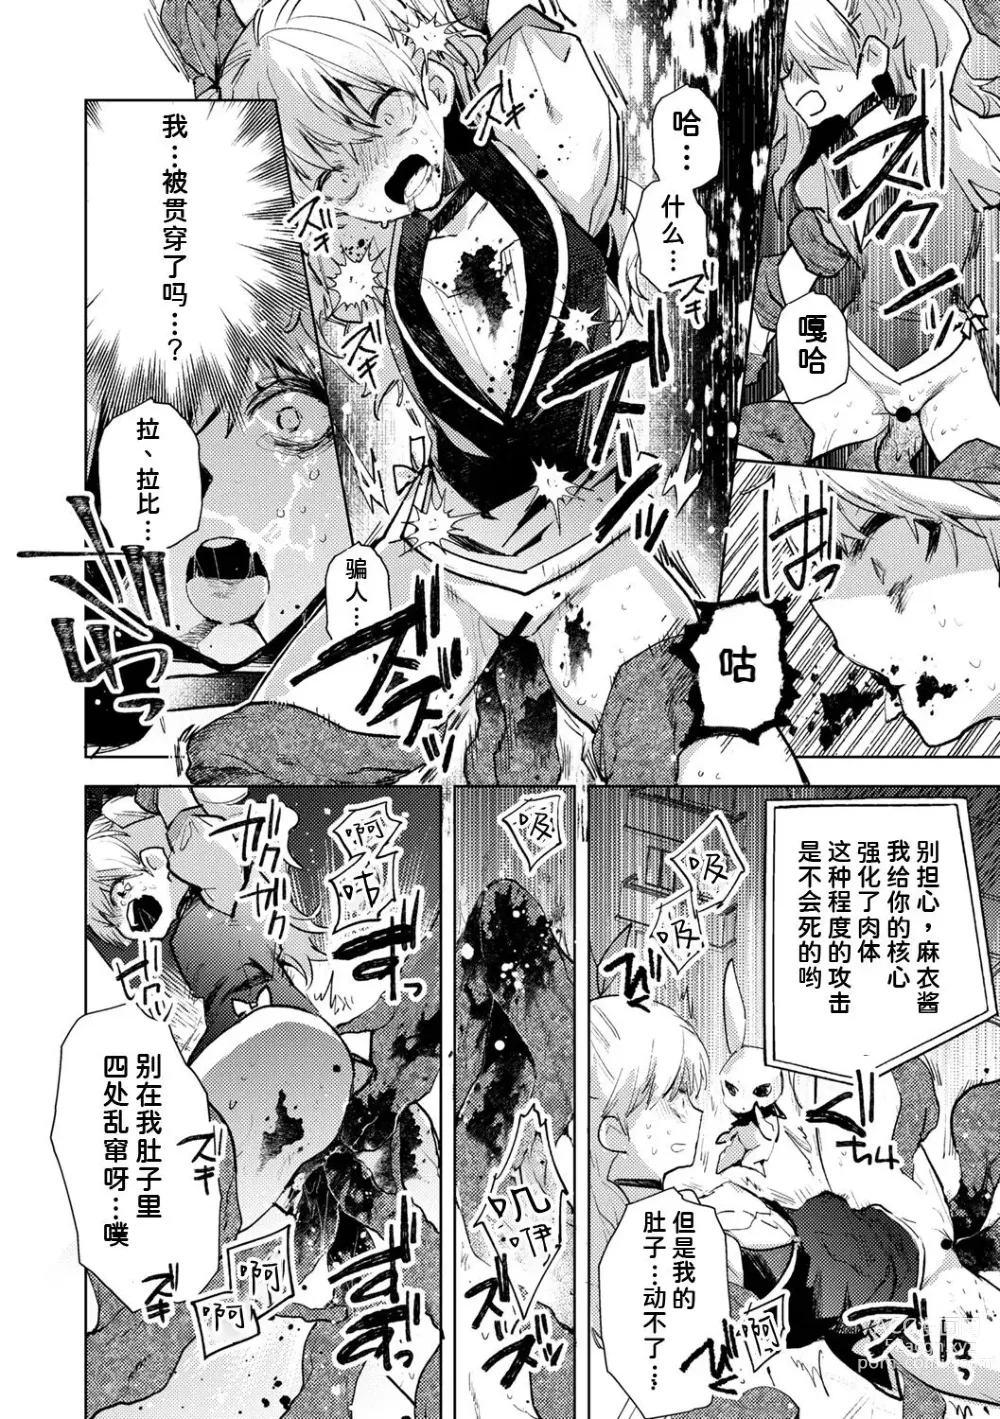 Page 6 of manga Mahou Shoujo Mai-chan